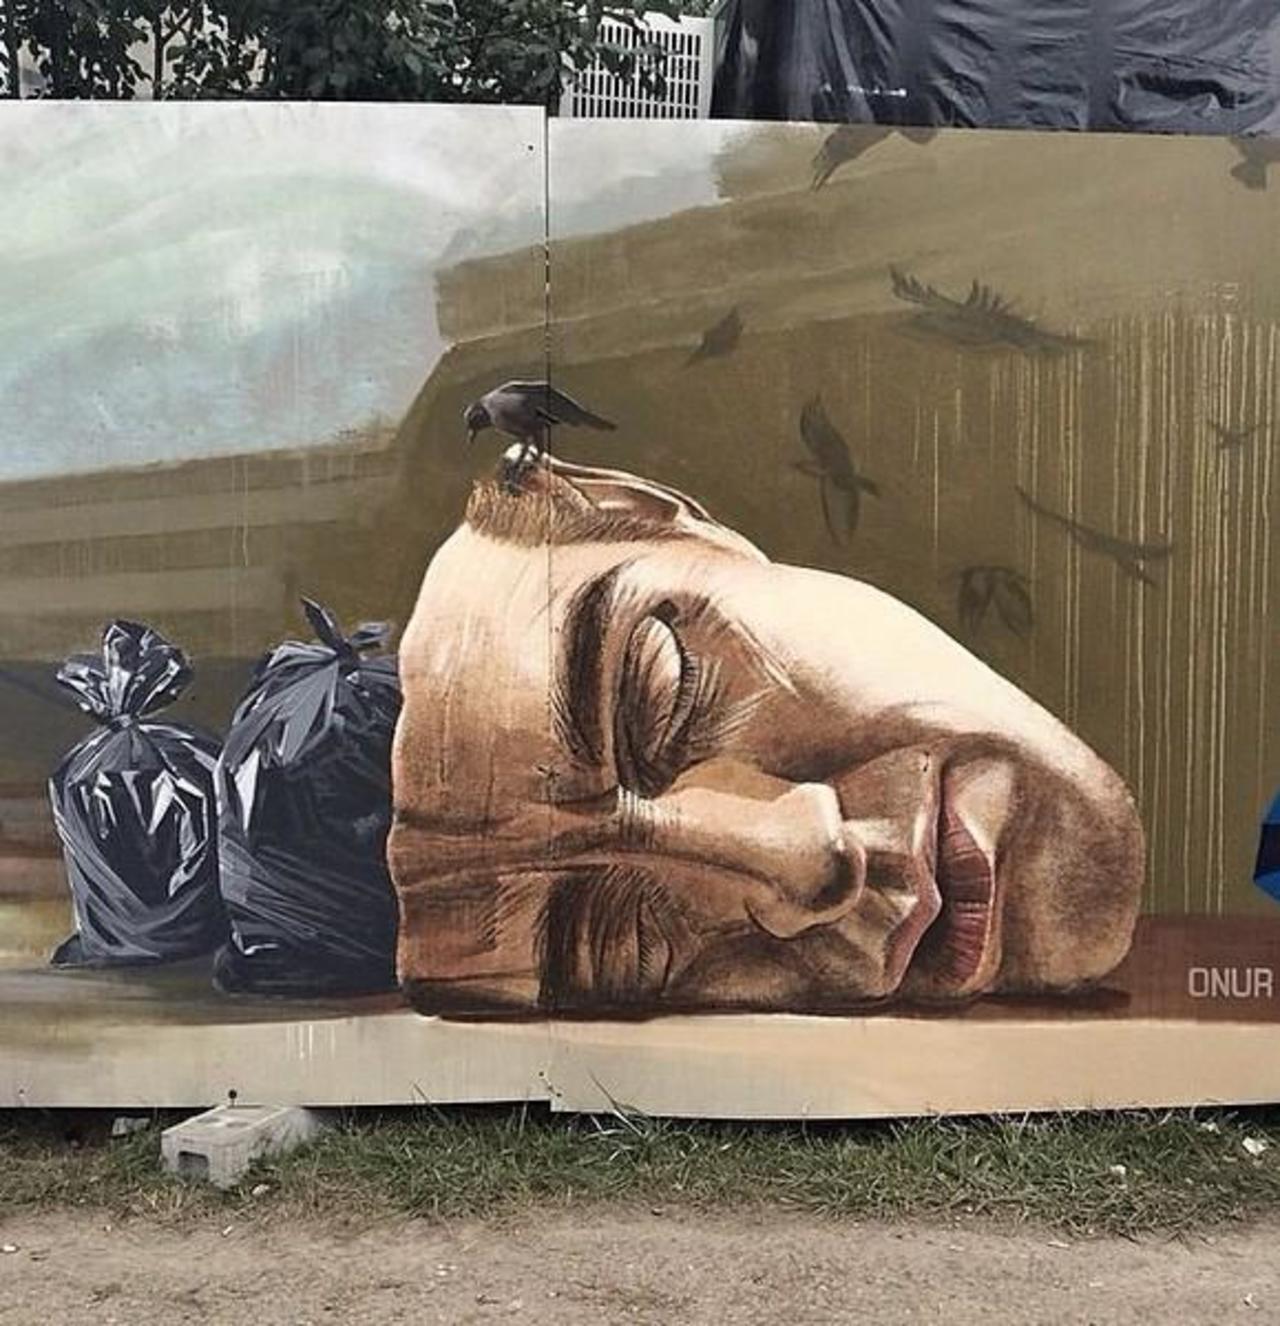 RT @designopinion: Artist ONUR new Street Art piece located in Biel, Switzerland #art #graffiti #mural #streetart https://t.co/Lo3h5W0V7N